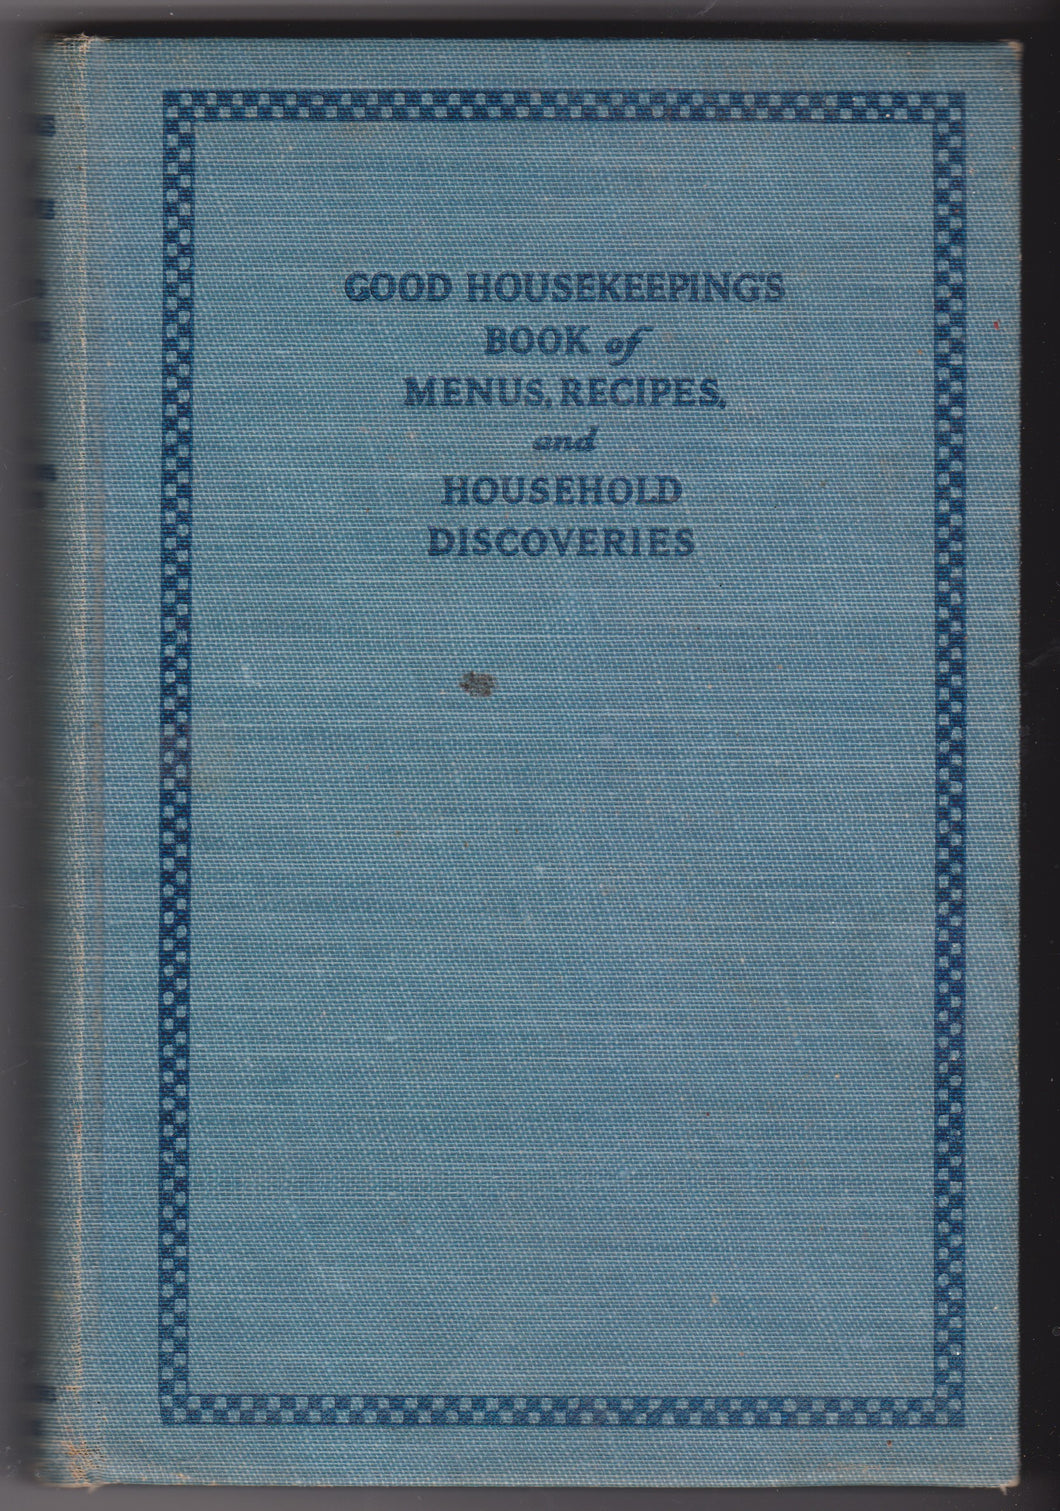 Good Housekeeping's Book of Menus, Recipes and Household Discoveries by Good Housekeeping Institute